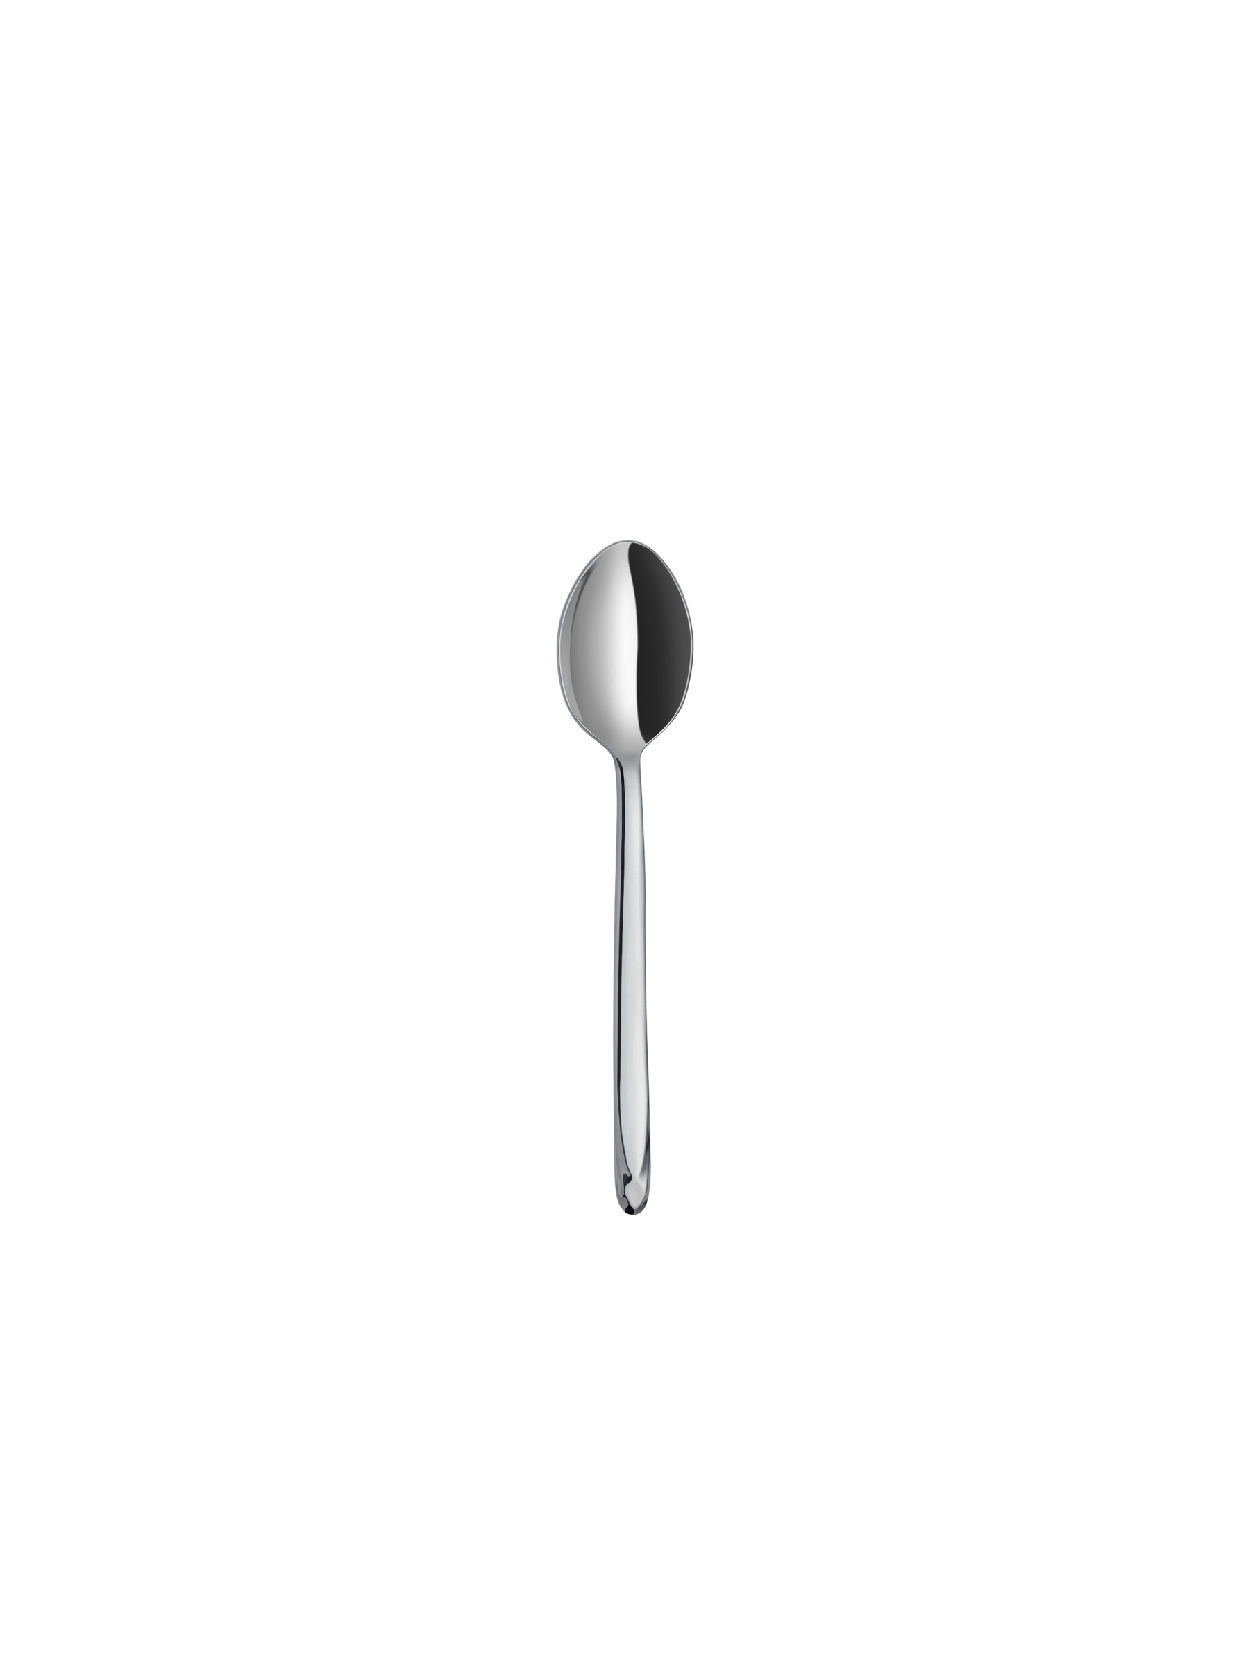 Asellus - Plain - Tea Spoon (6 Pcs)